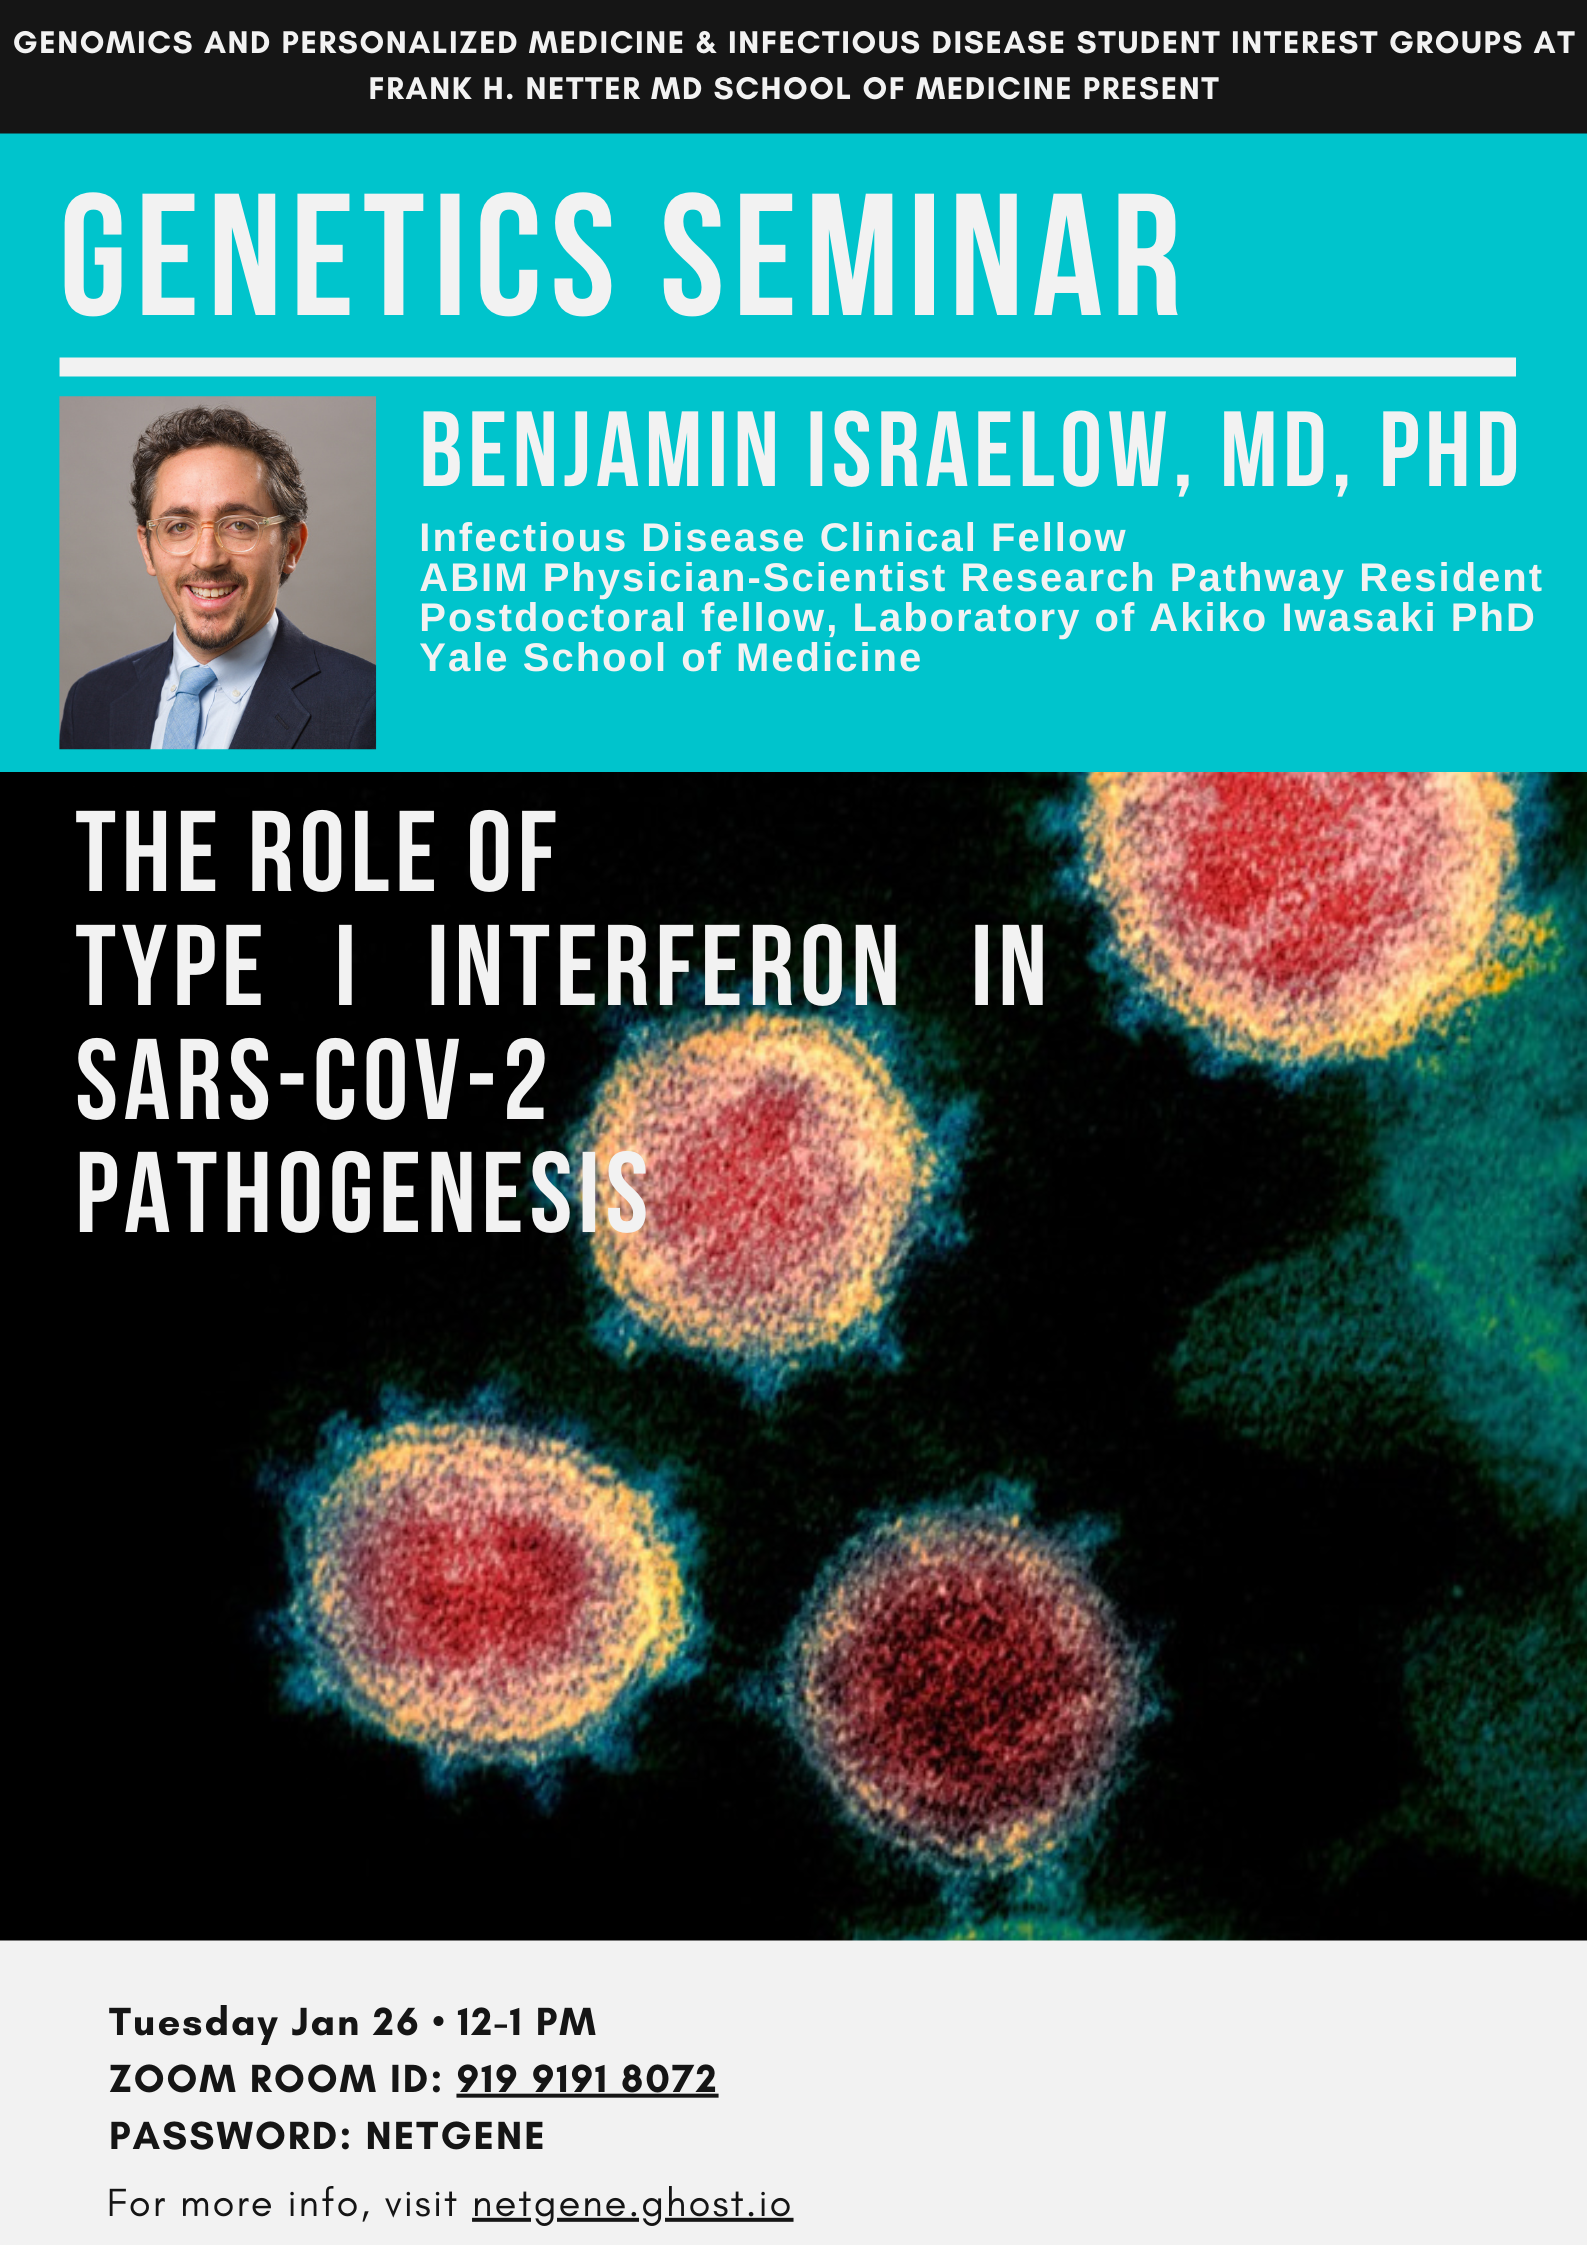 The role of type I interferon in SARS-CoV-2 pathogenesis